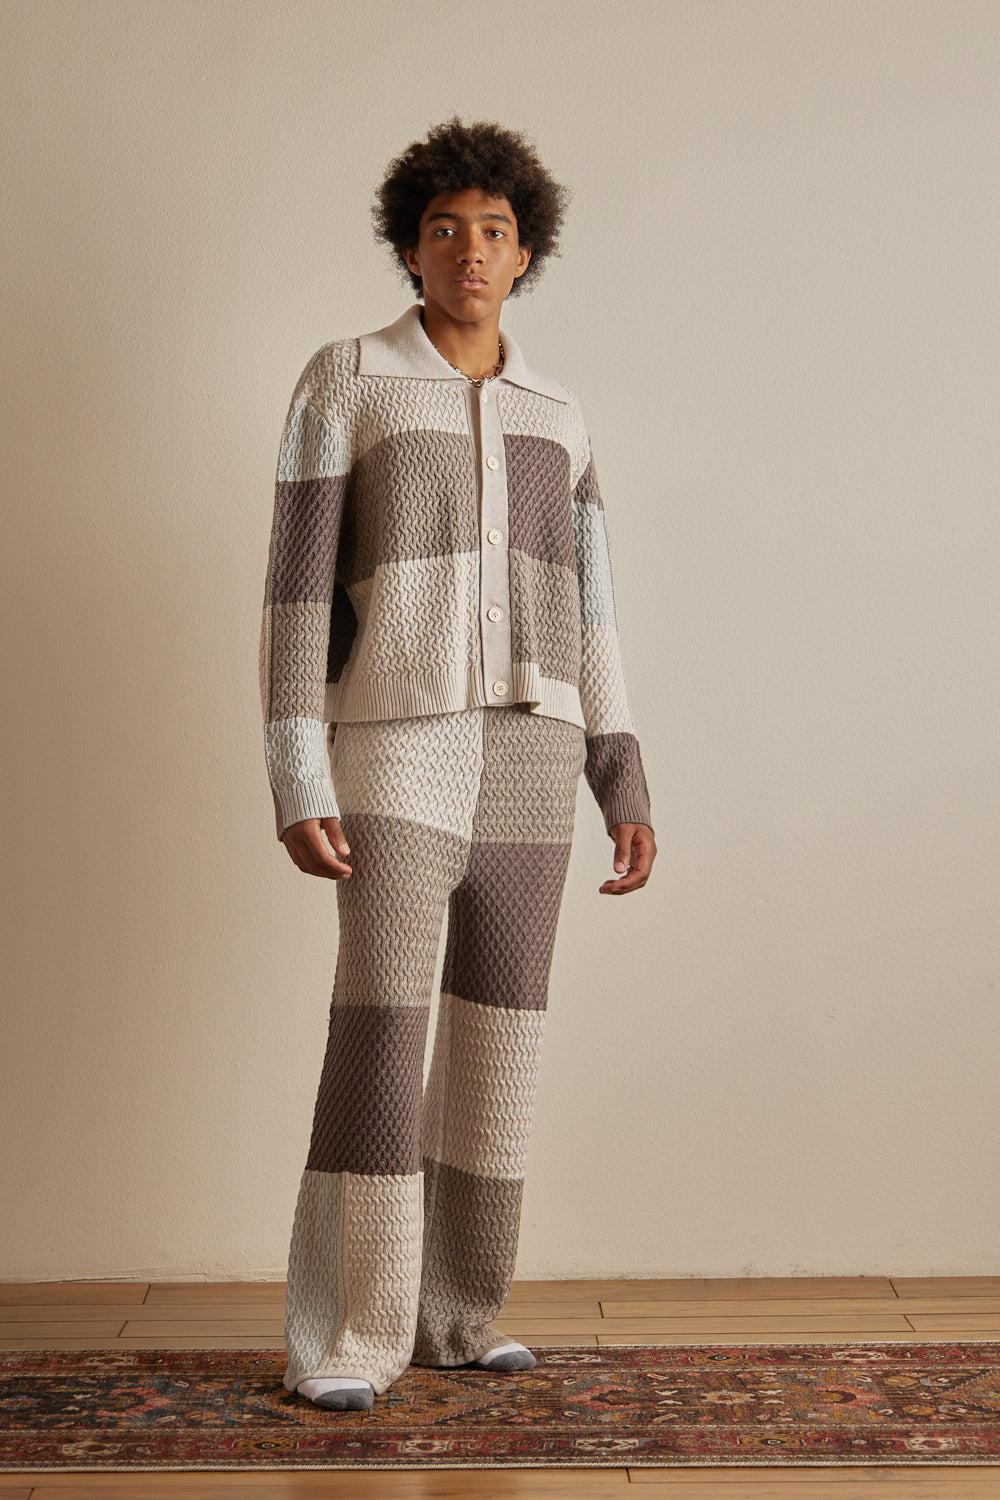 Greyscale Color-block Knit Cardigan